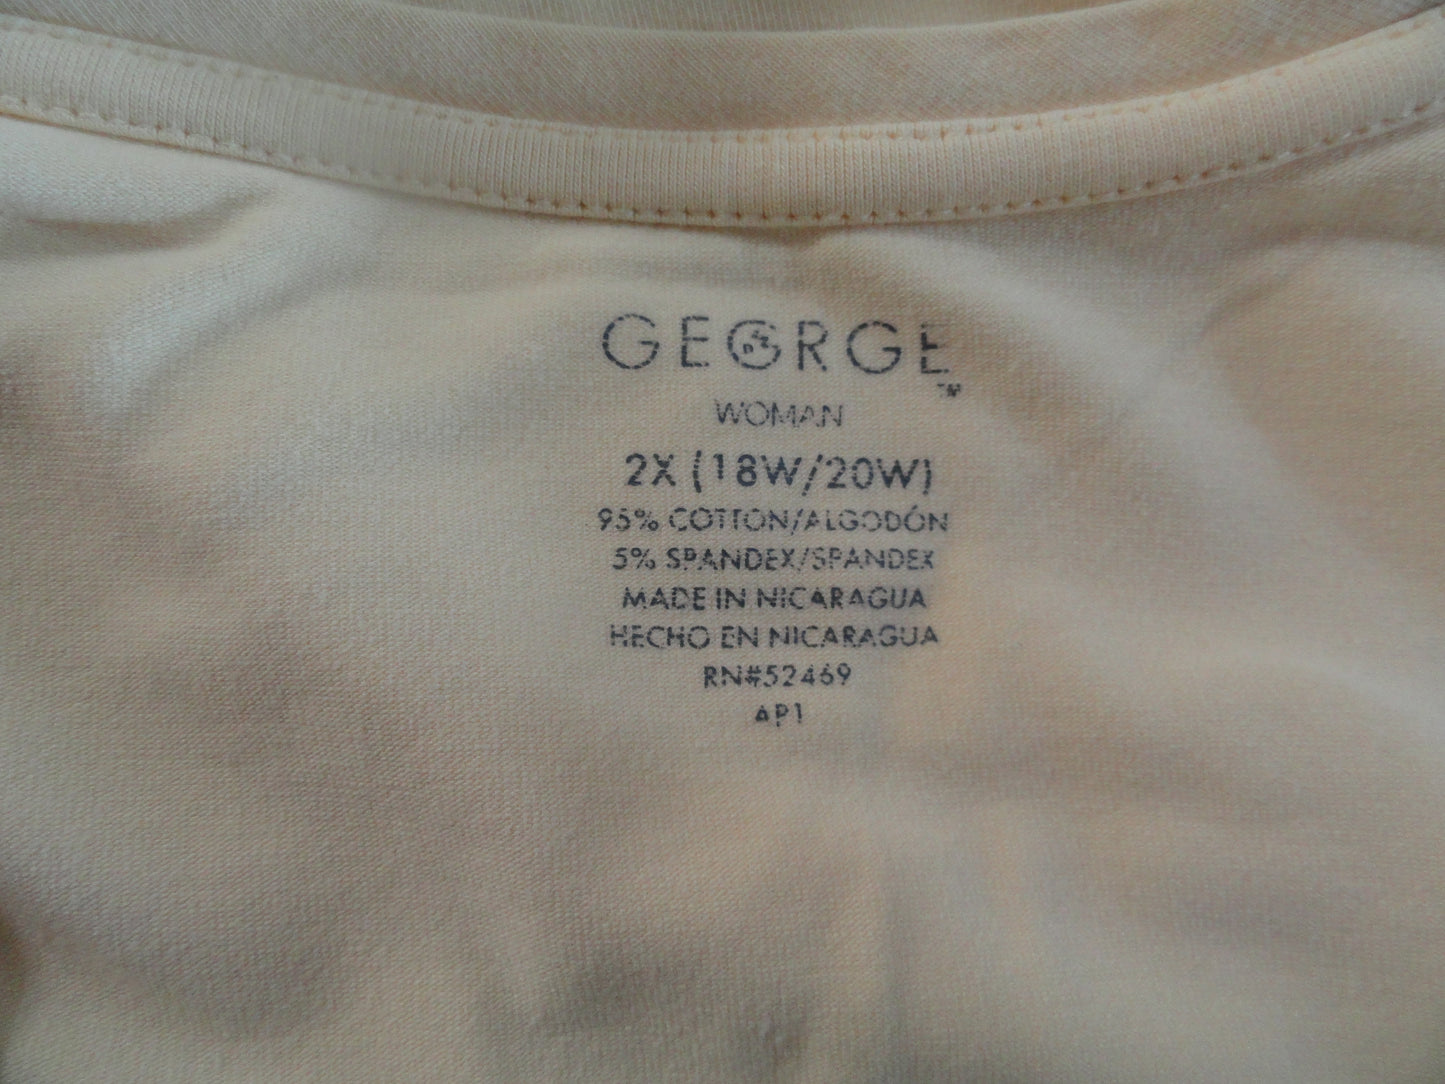 George 70's Woman Short Sleeve Shirt Sz 2X SKU 000283-9